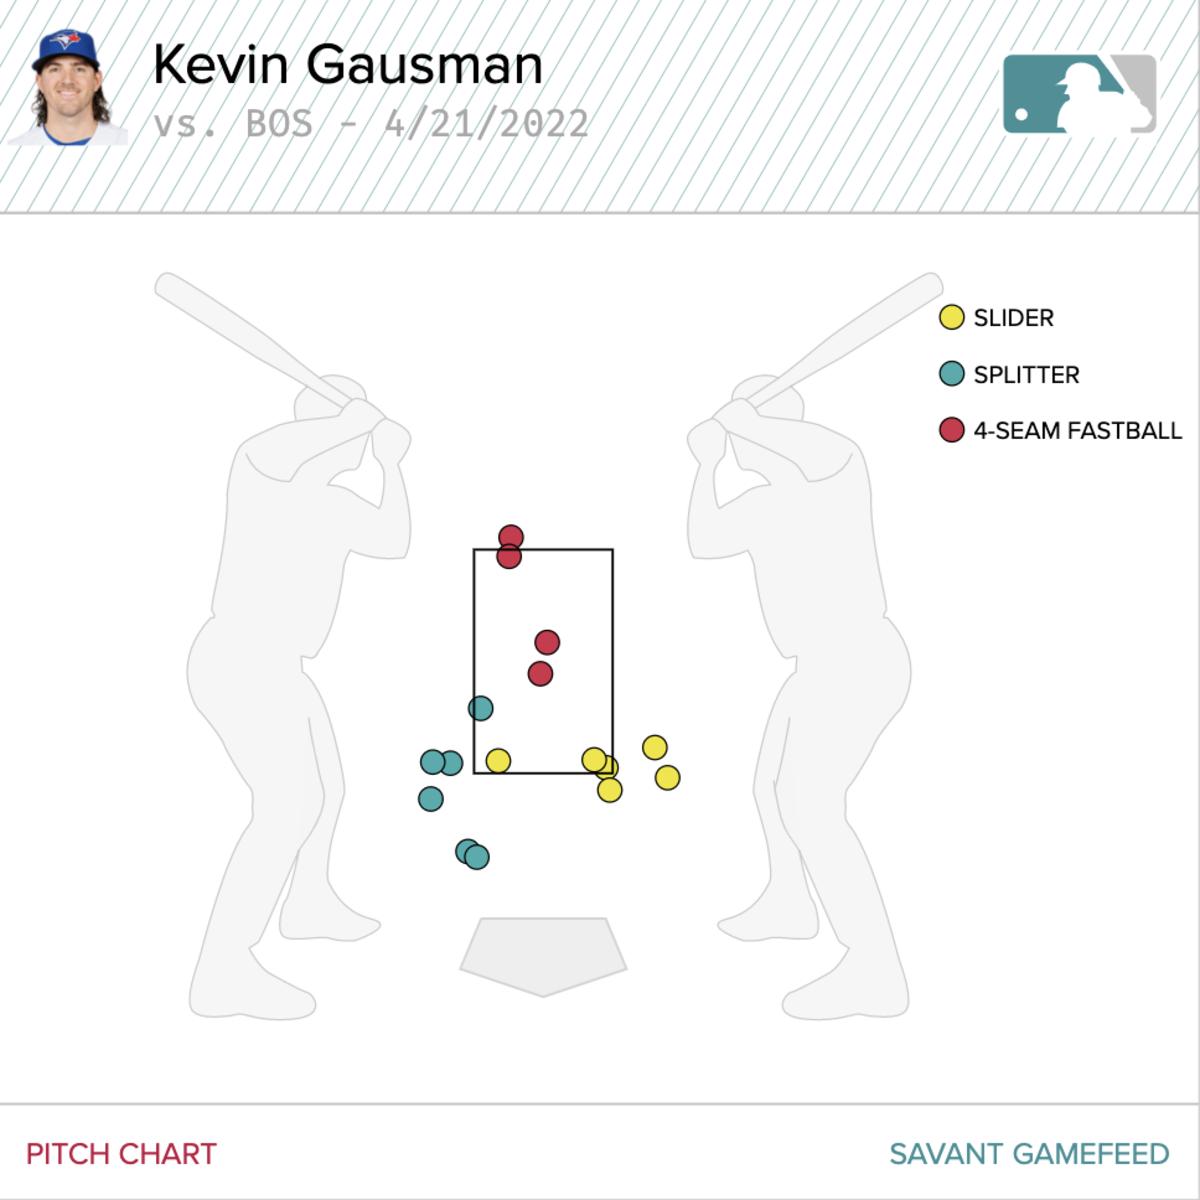 Gausman's swinging strikes on Thursday